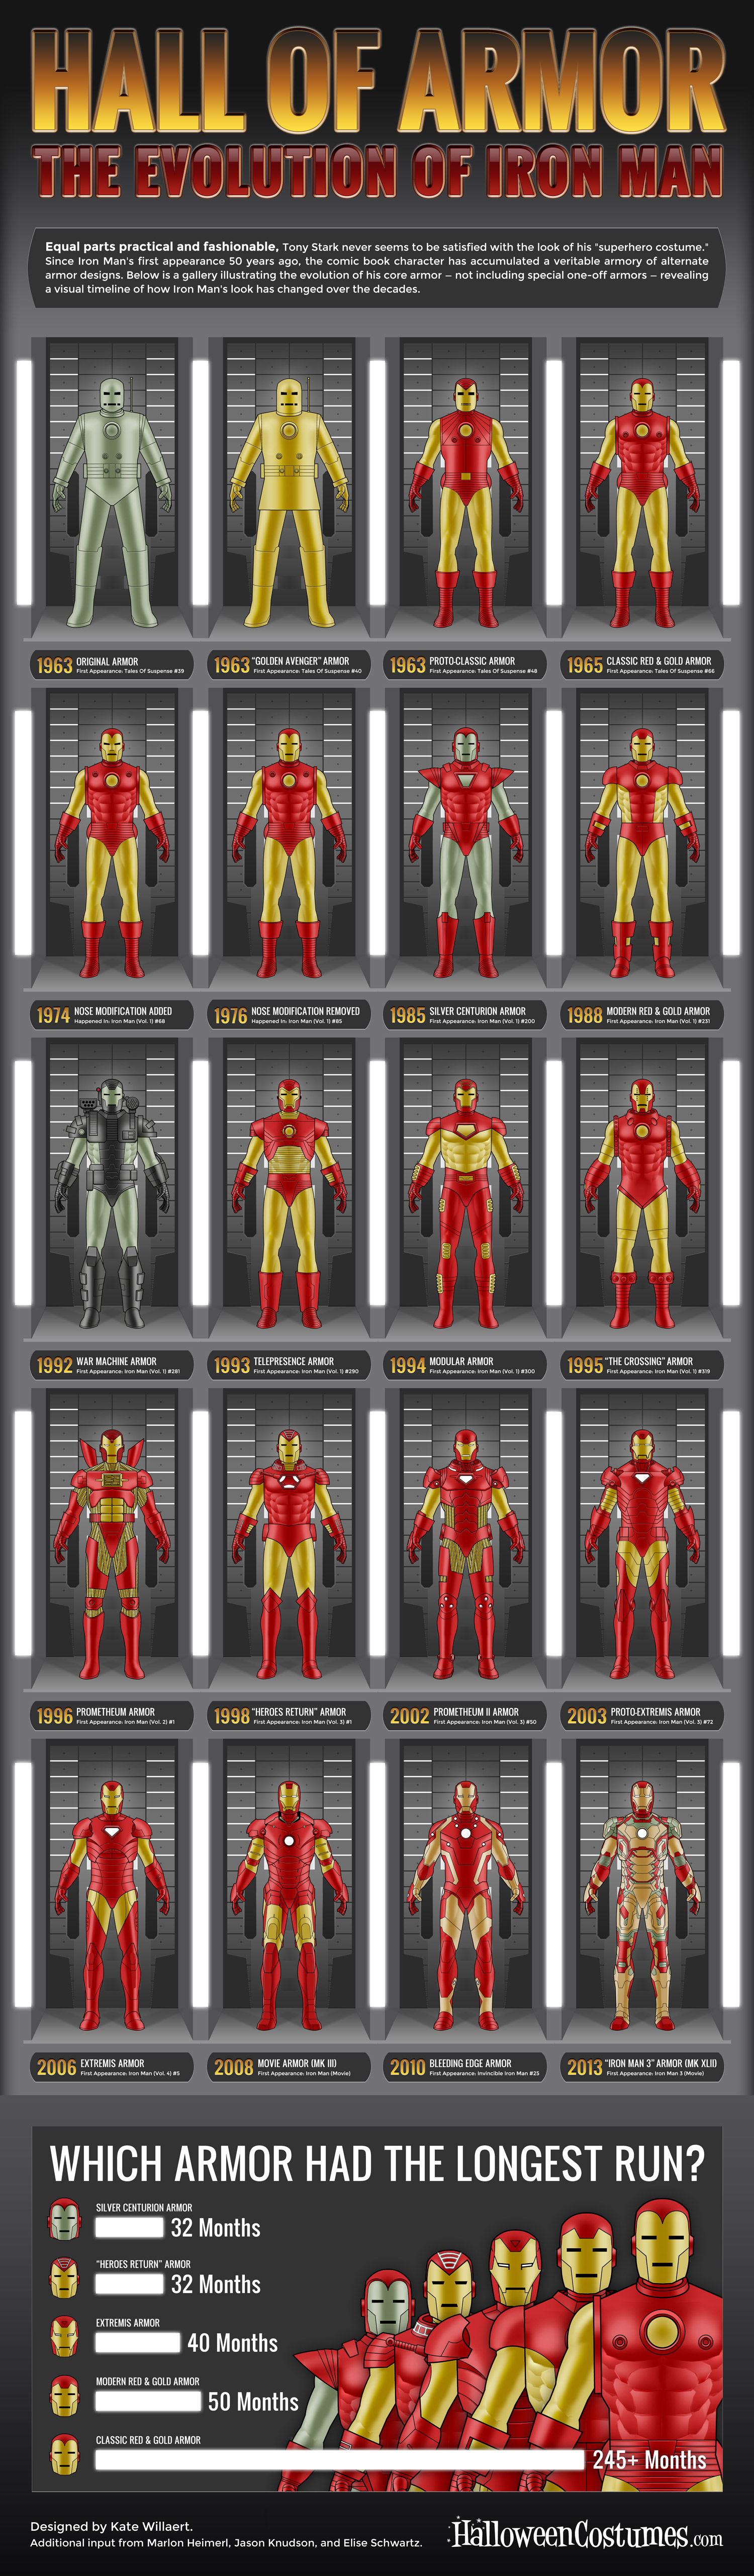 HalloweenCostumes.com: Wall of Armor, the Evolution of Iron Man